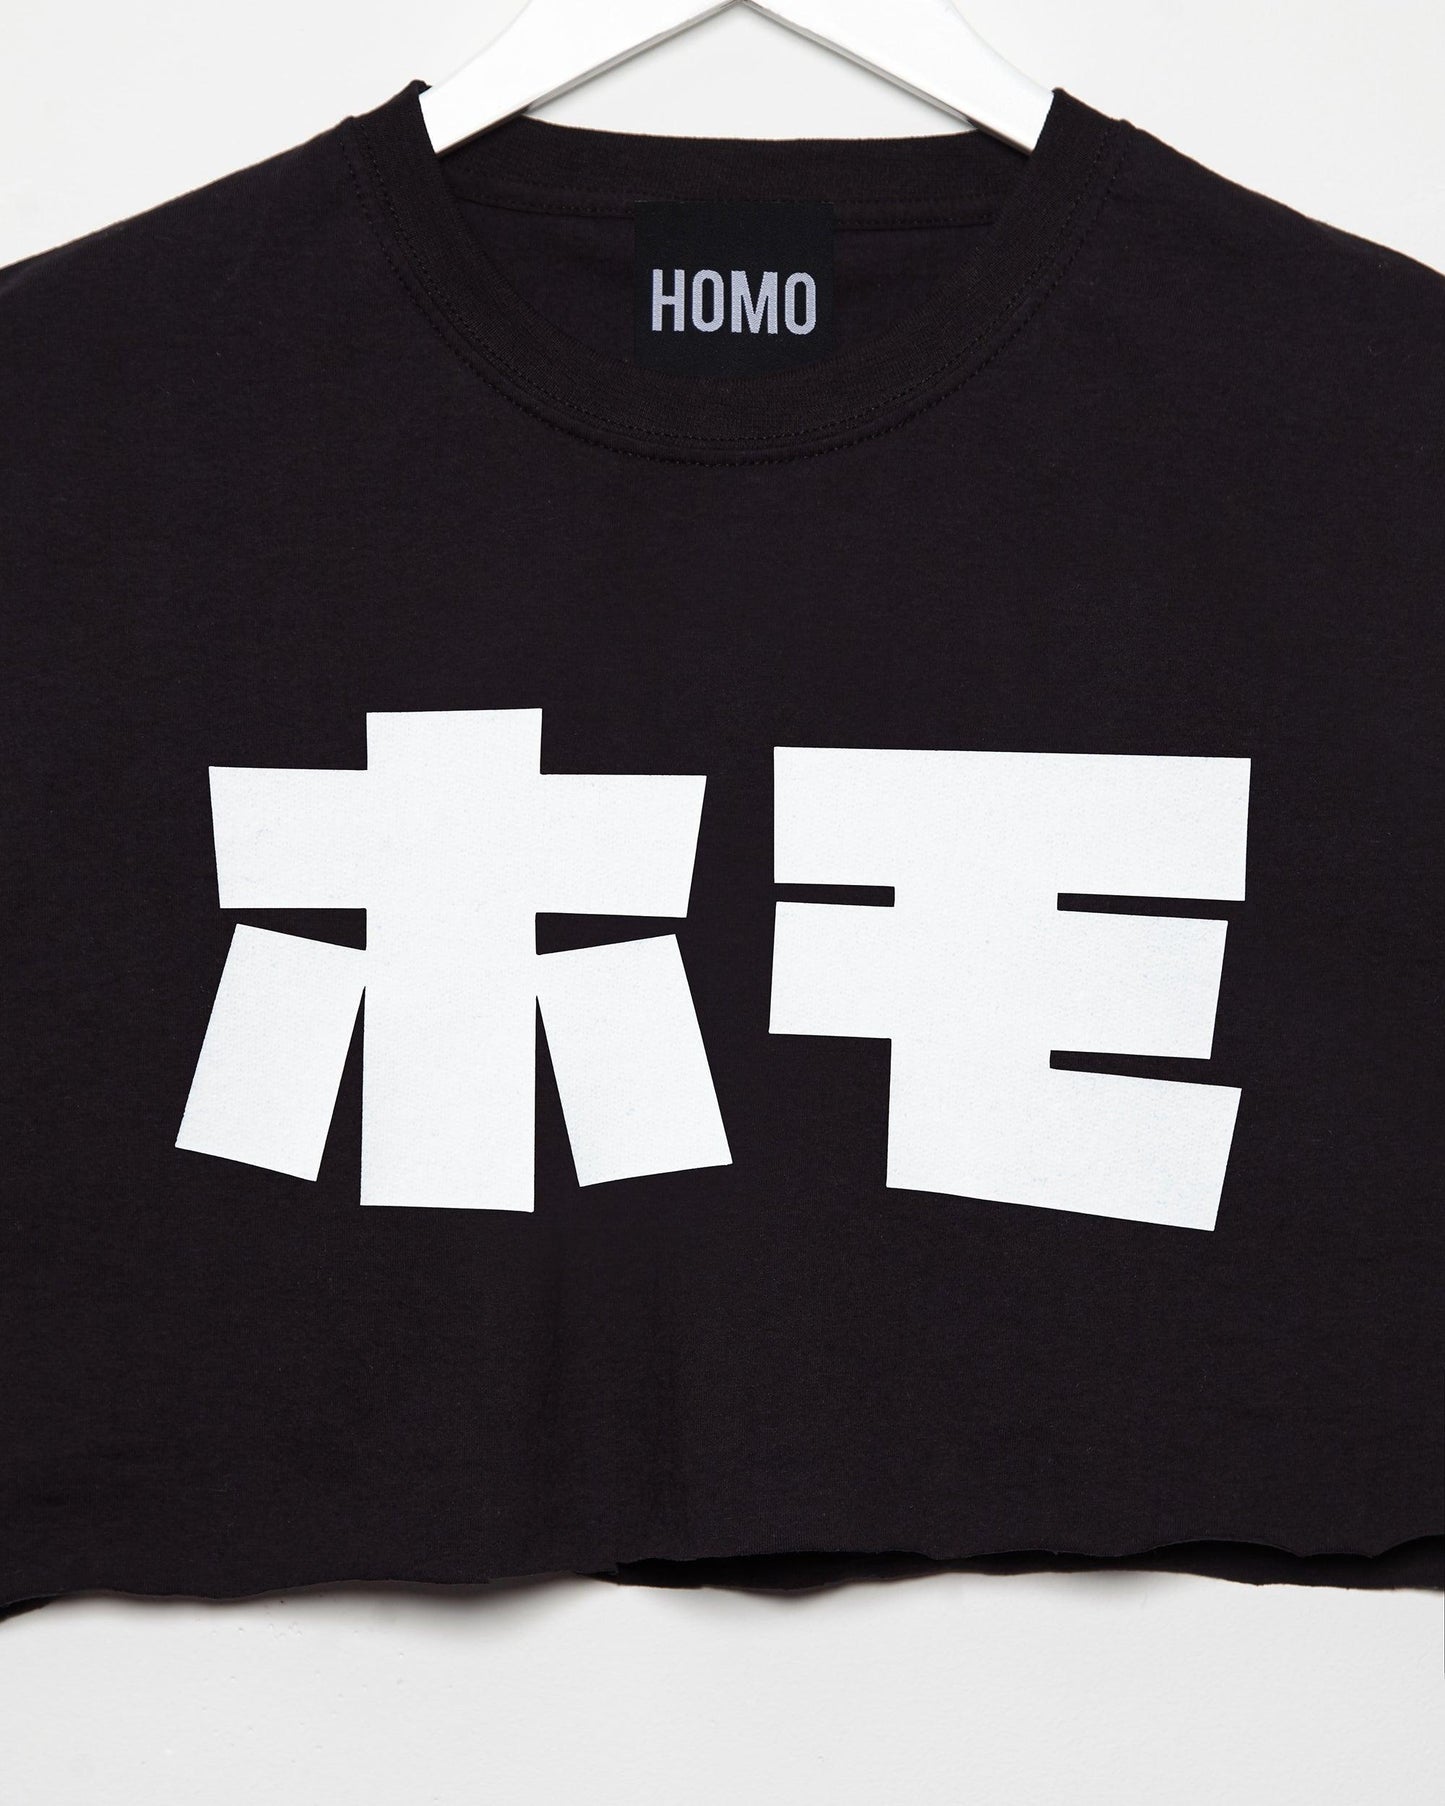 HOMO in Japanese, white on black - mens sleeveless crop top. - HOMOLONDON